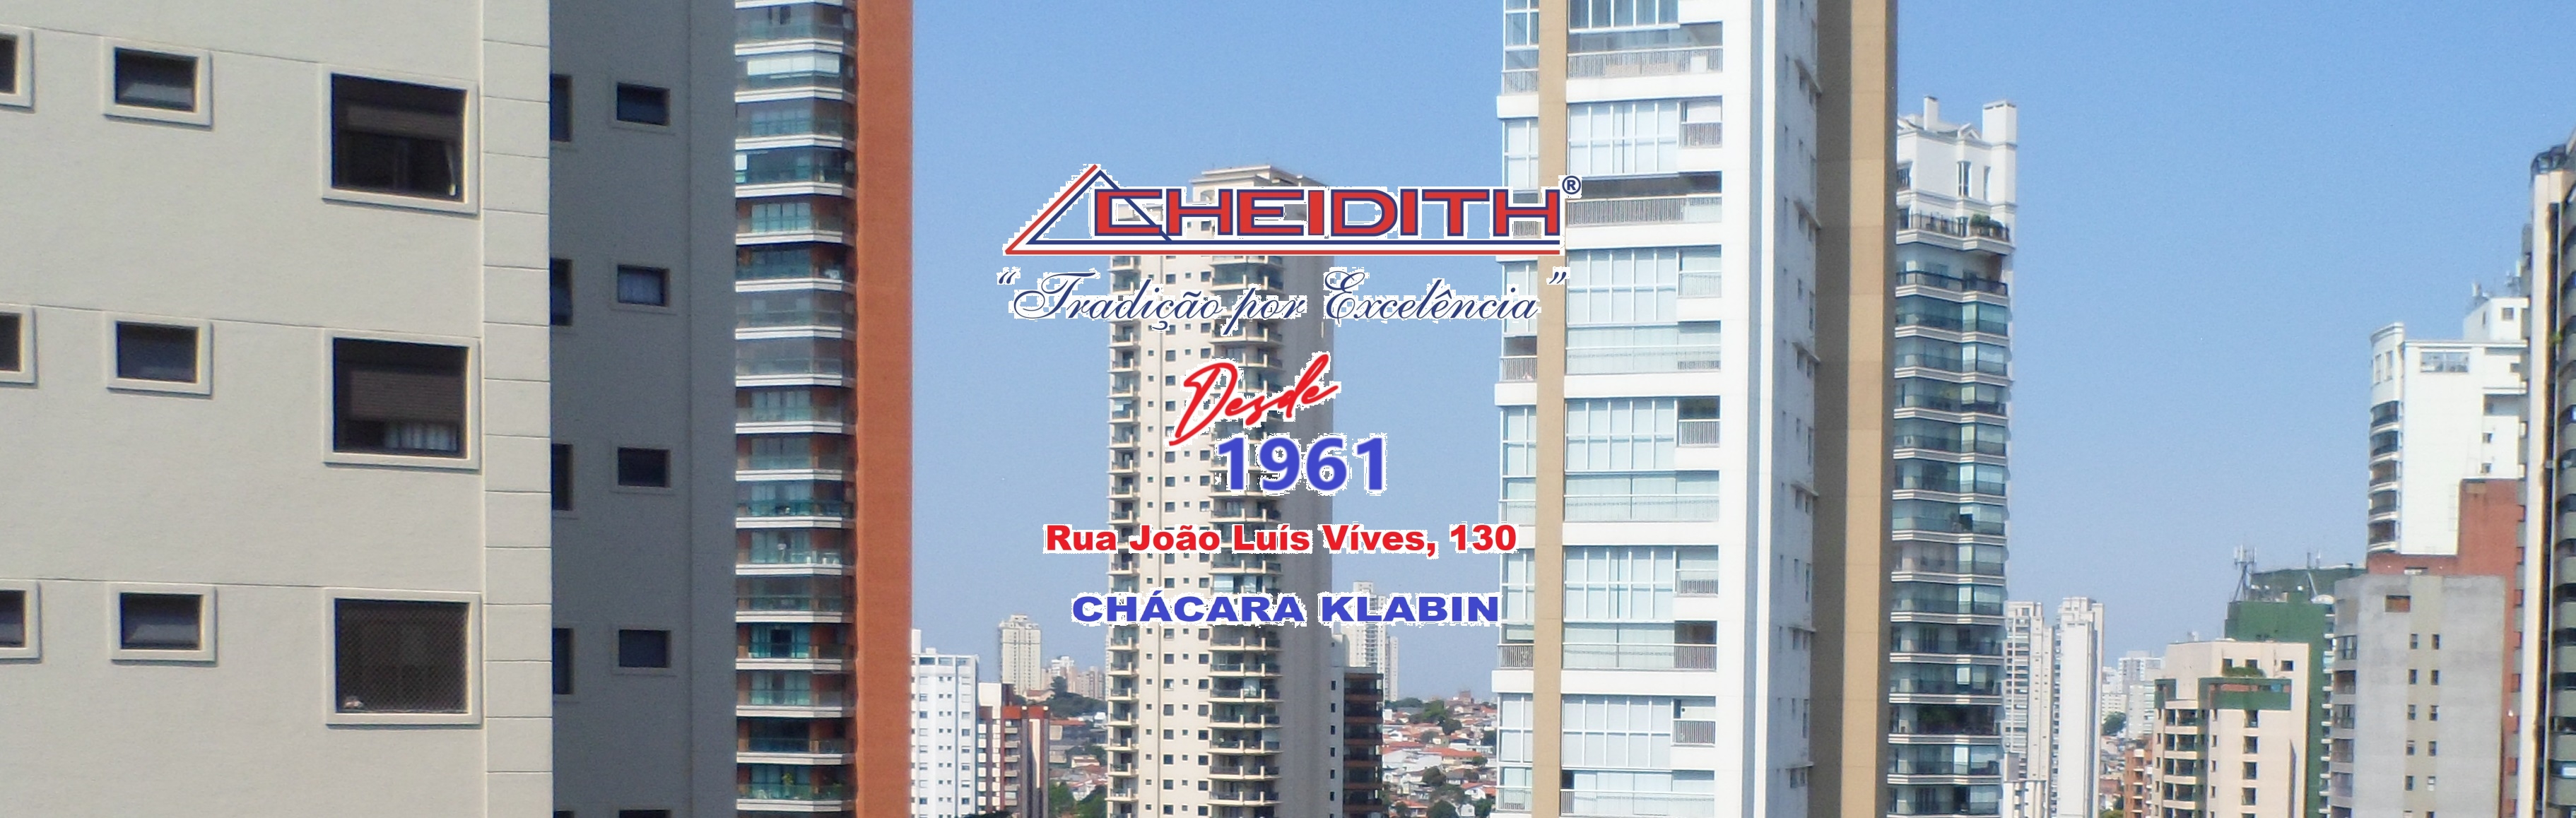 cheidith double deck klabin (138)